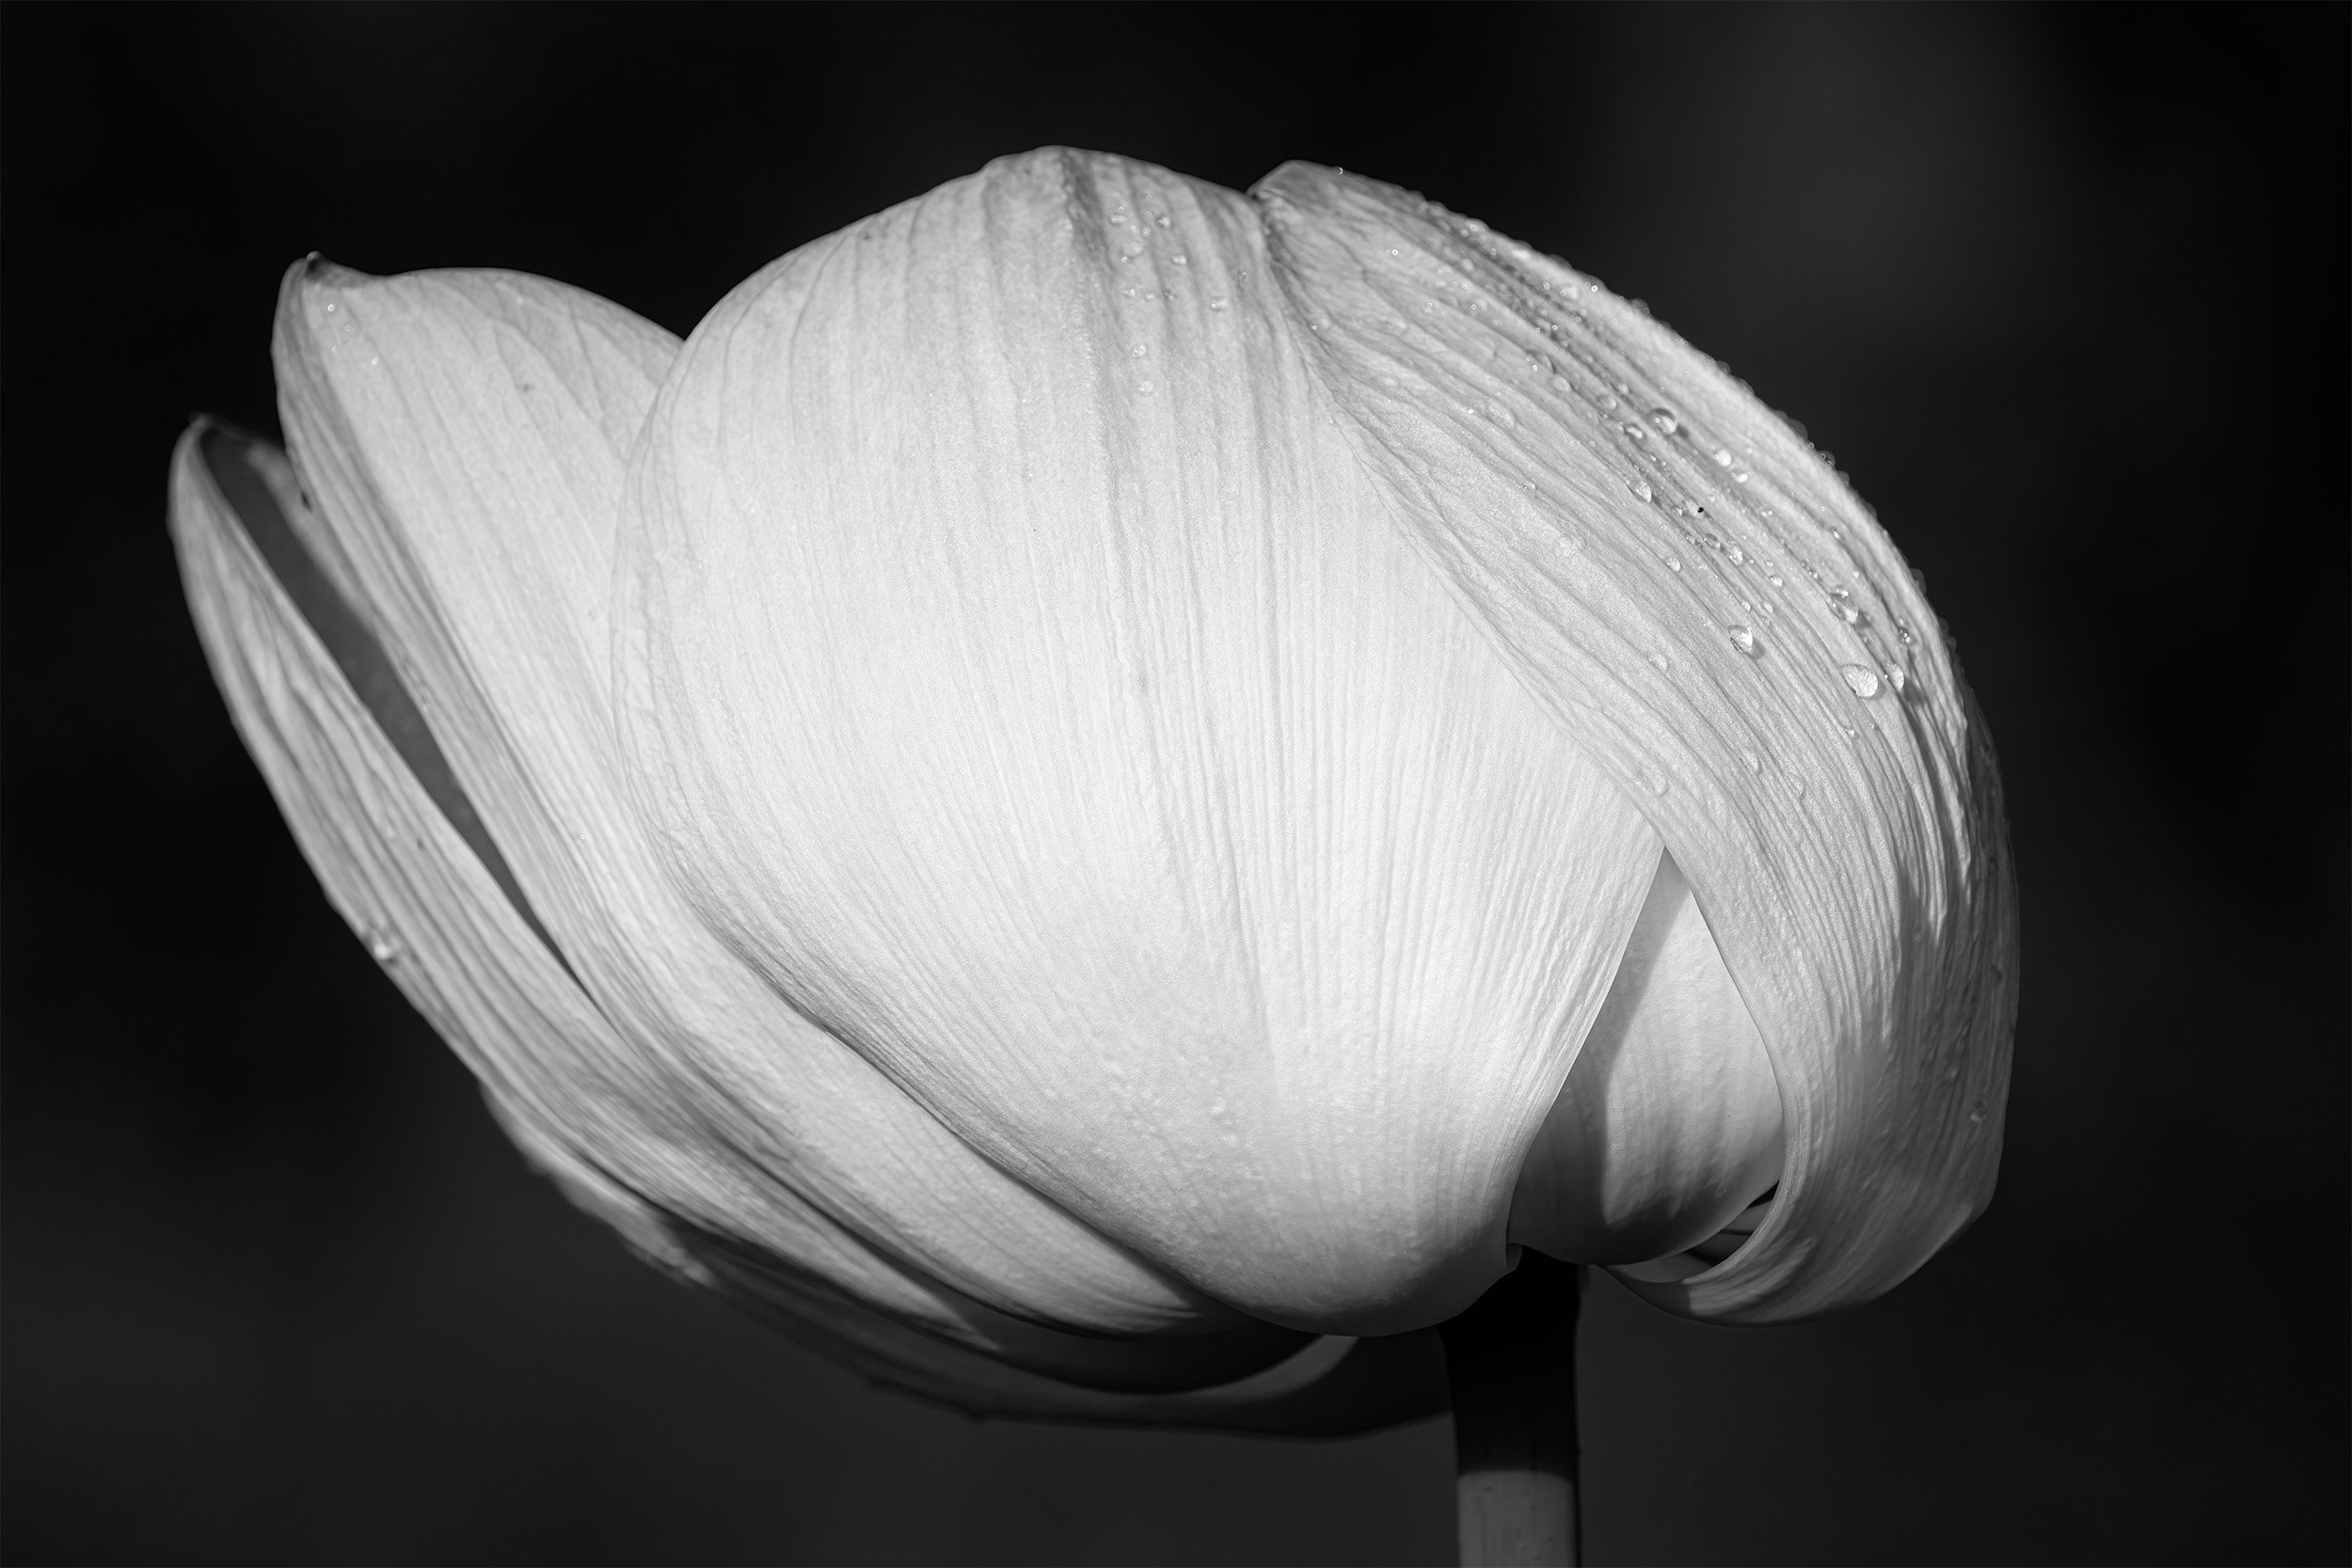 A Kenilworth Gardens Lotus 